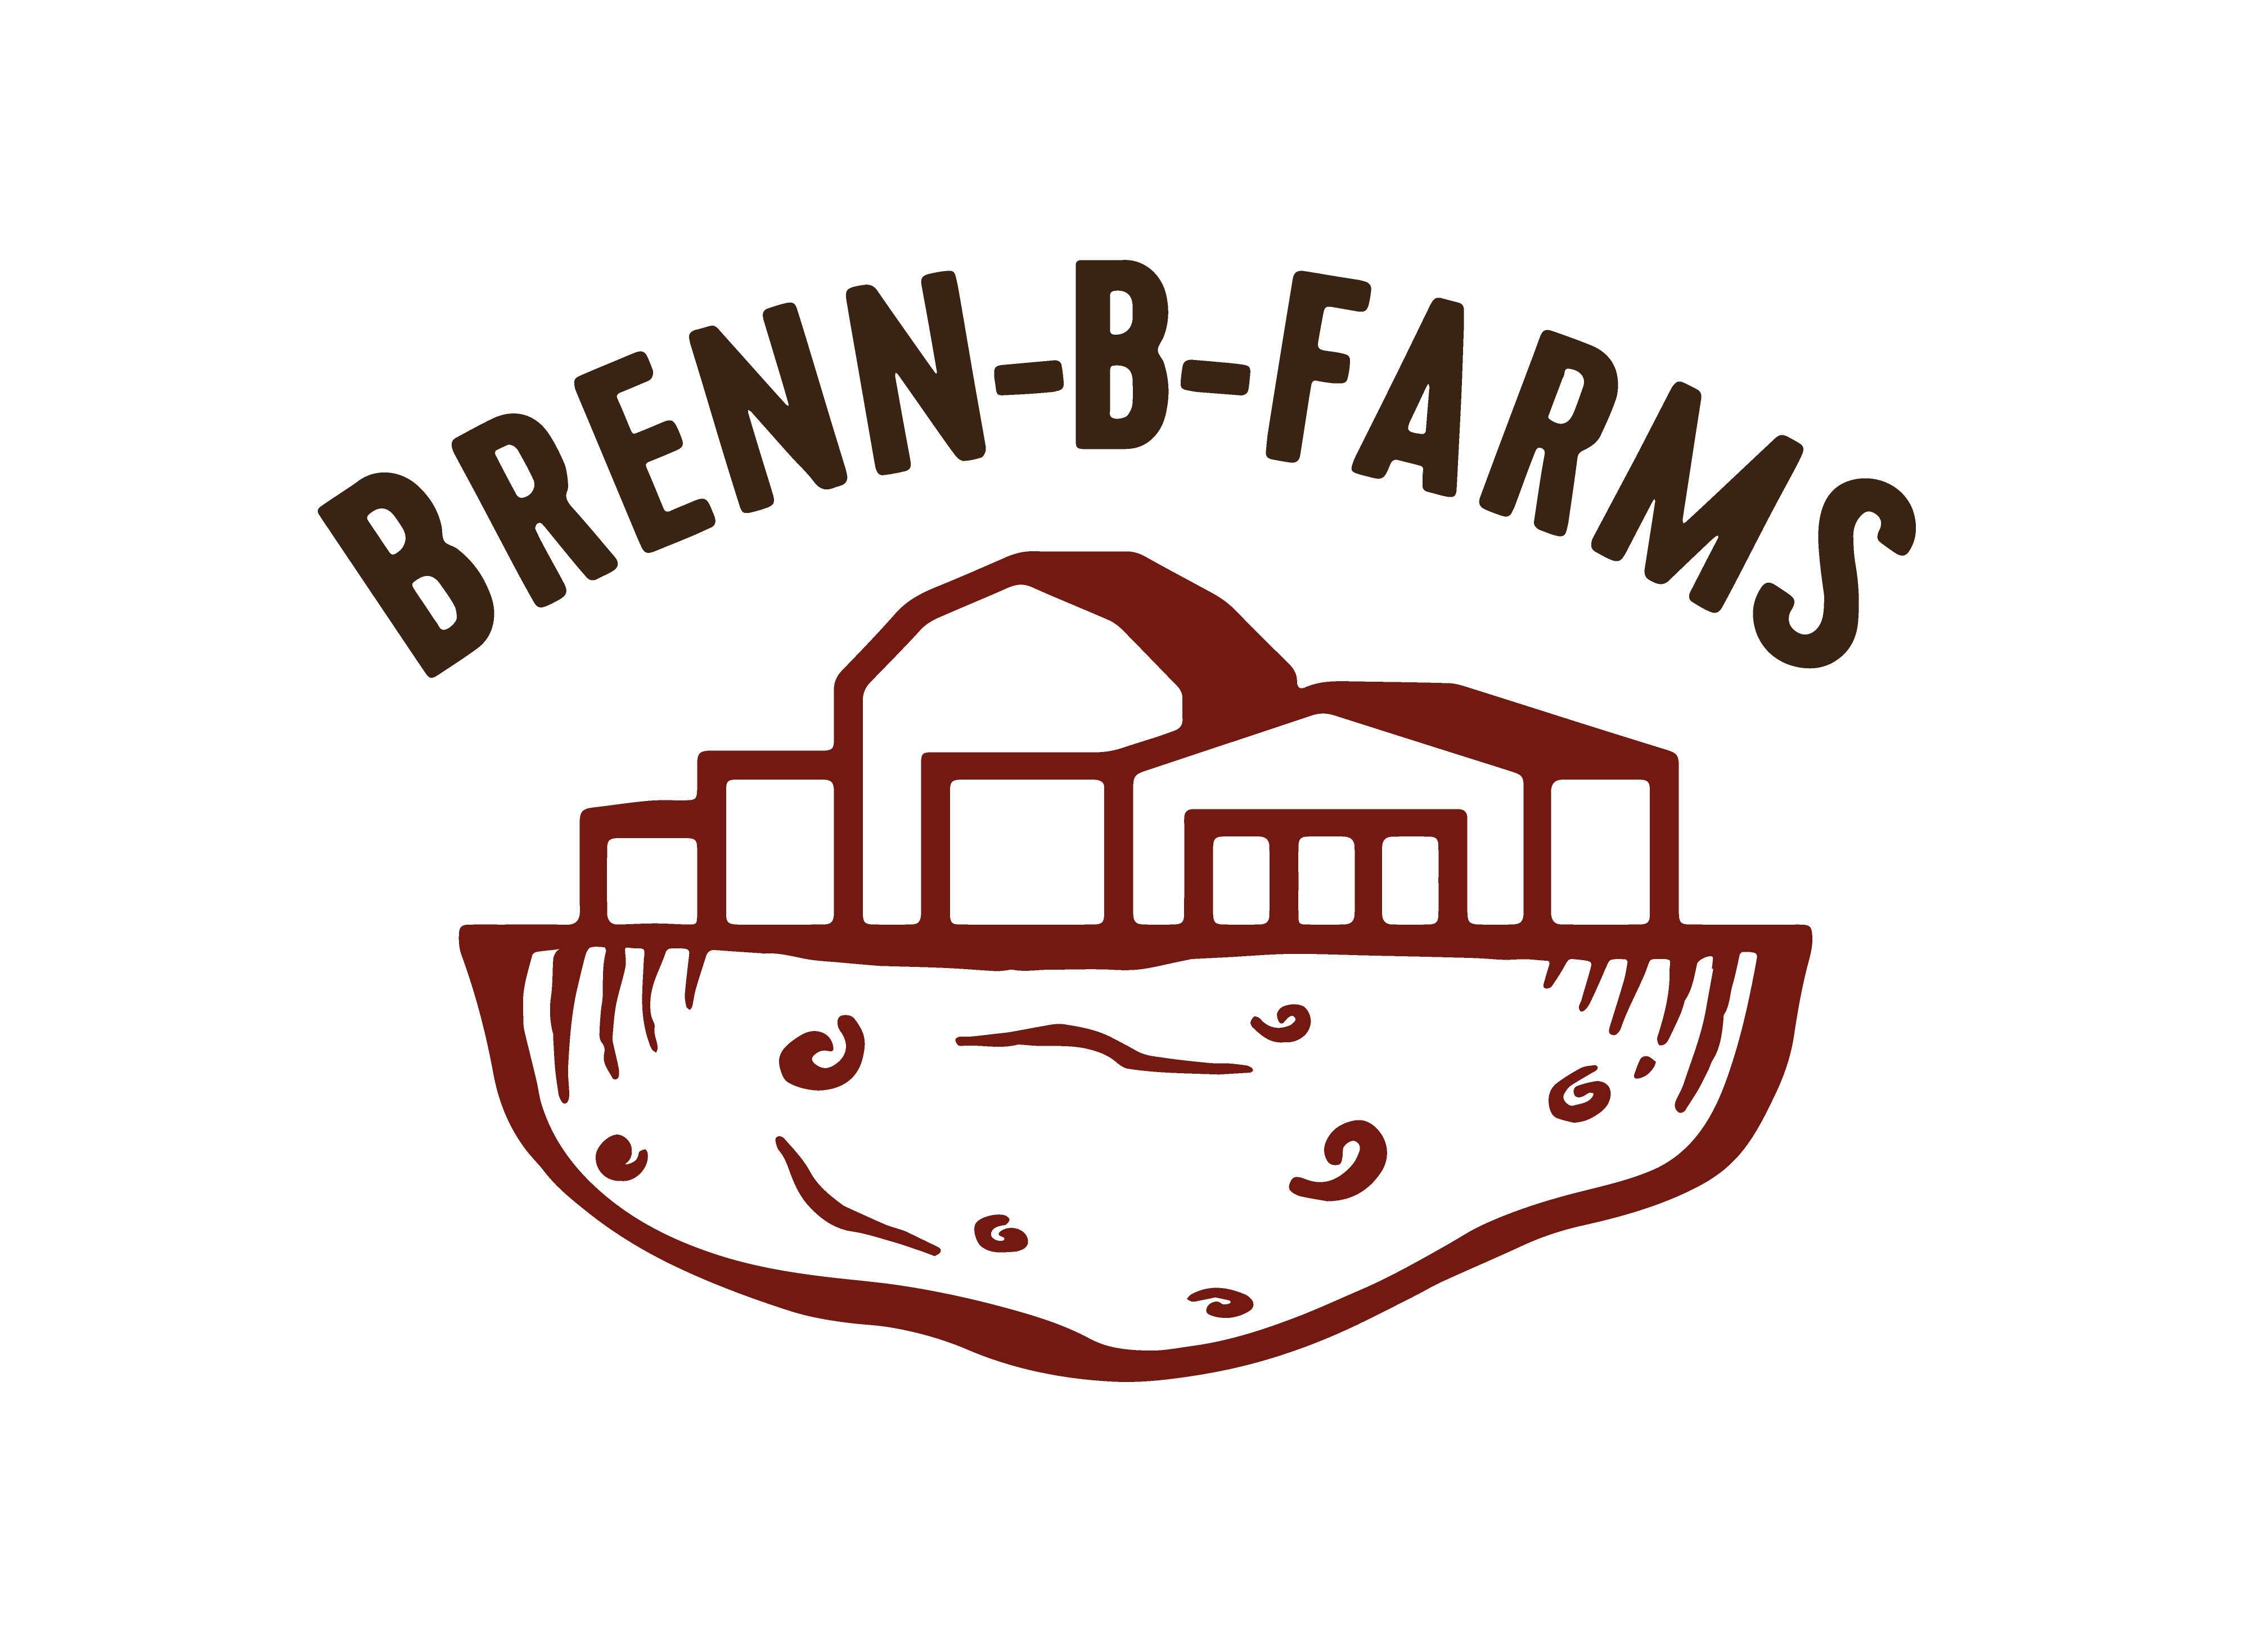 dales_new_brenn_b_farms_logo.jpeg